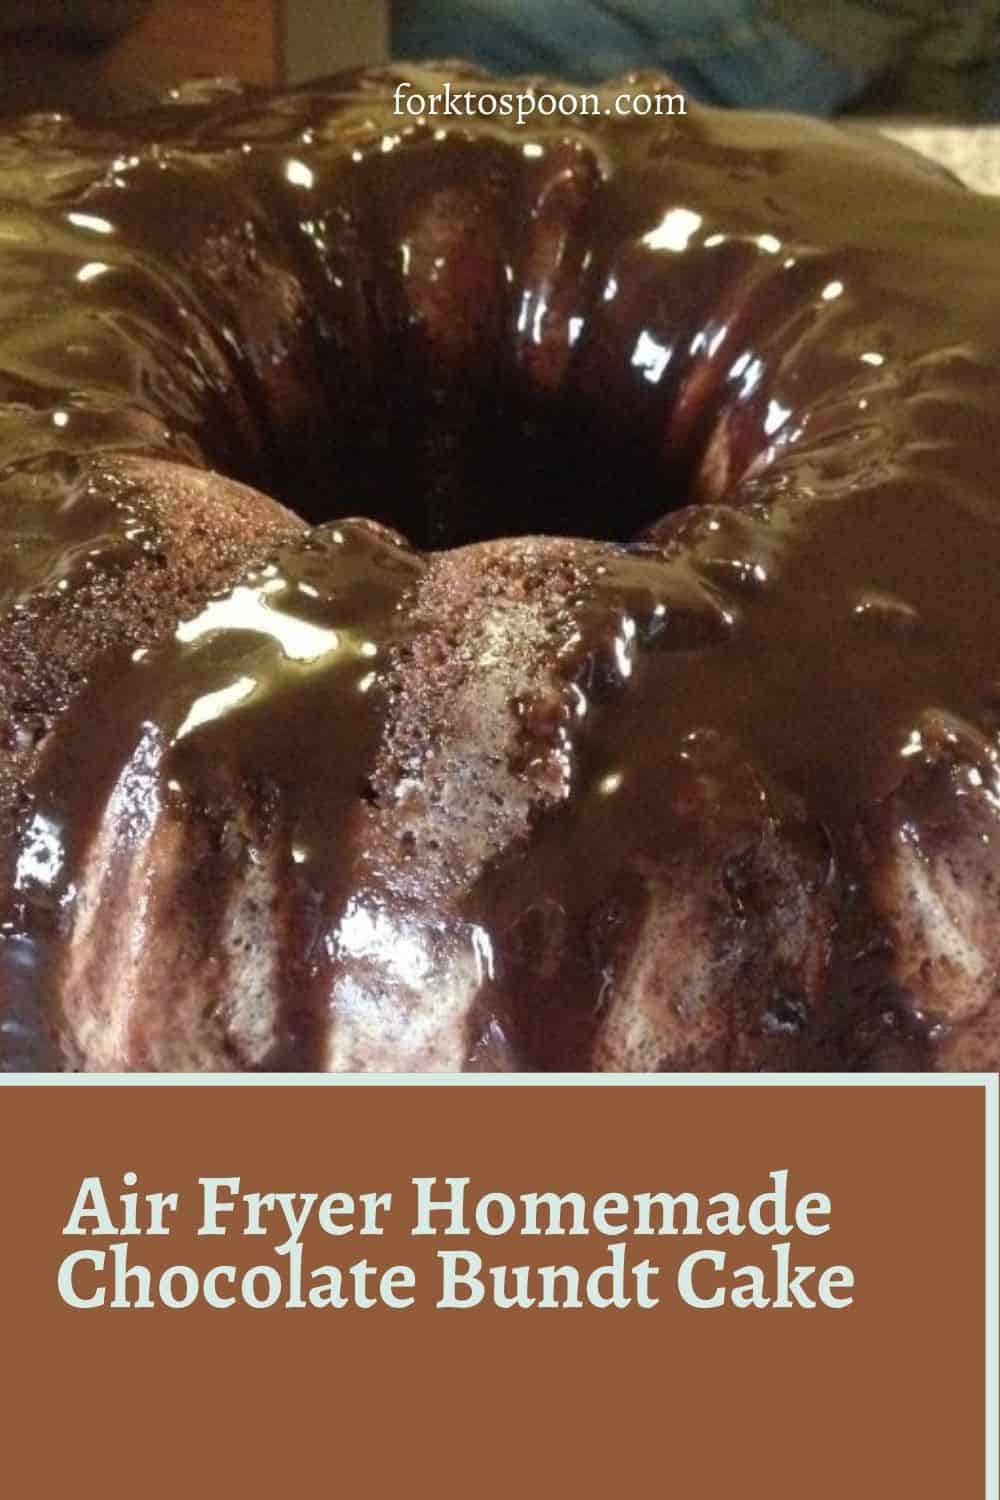 Air Fryer Homemade Chocolate Bundt Cake